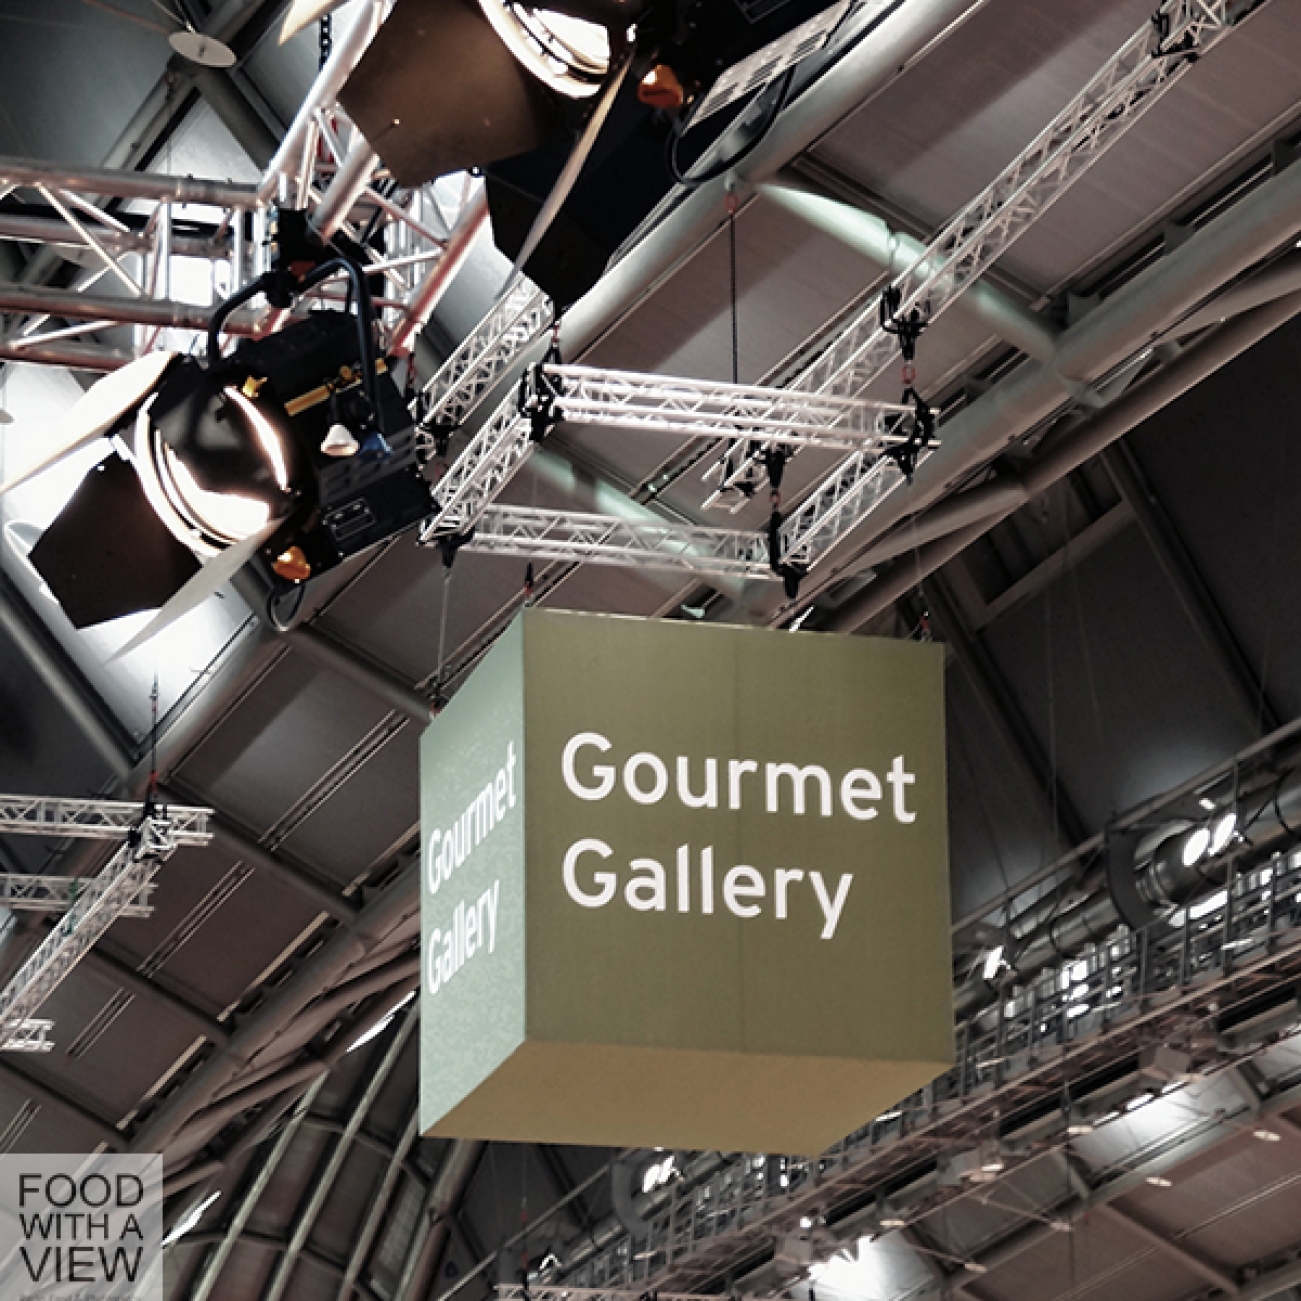 Gourmet Gallery at Frankfurt Book Fair 2013